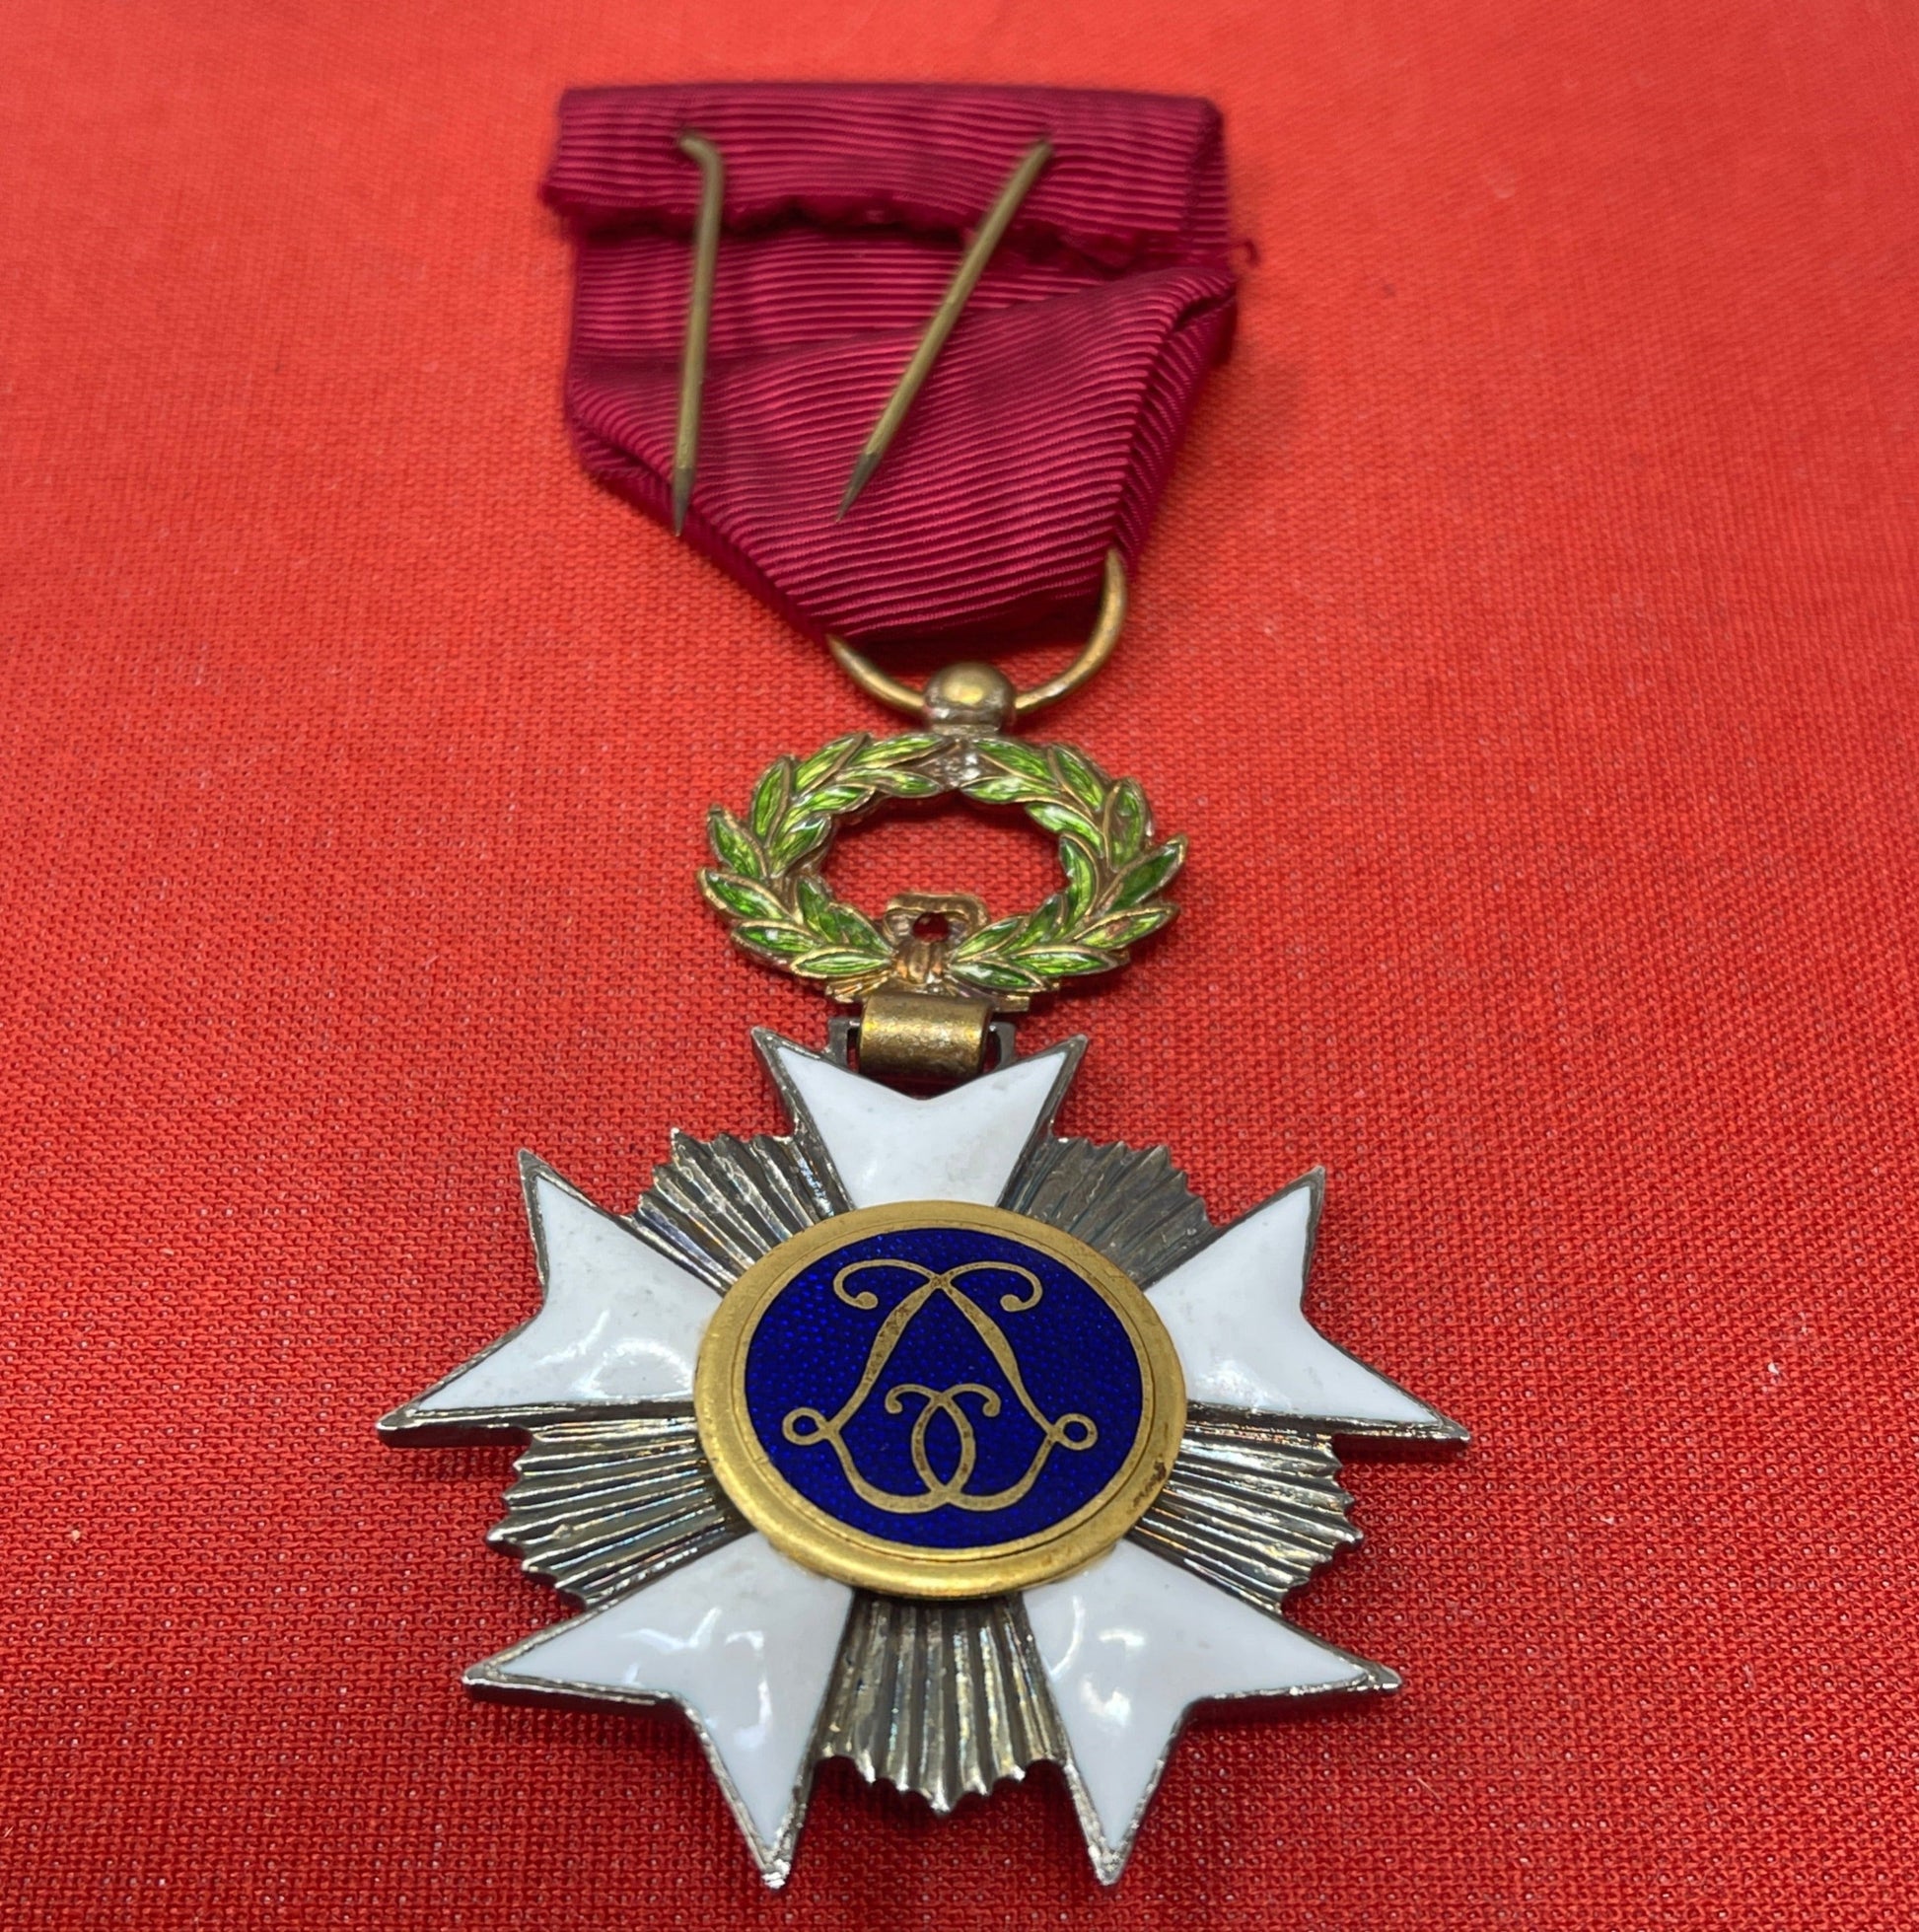 Belgian The Order of the Crown (Ordre de la Couronne / Kroonorde)